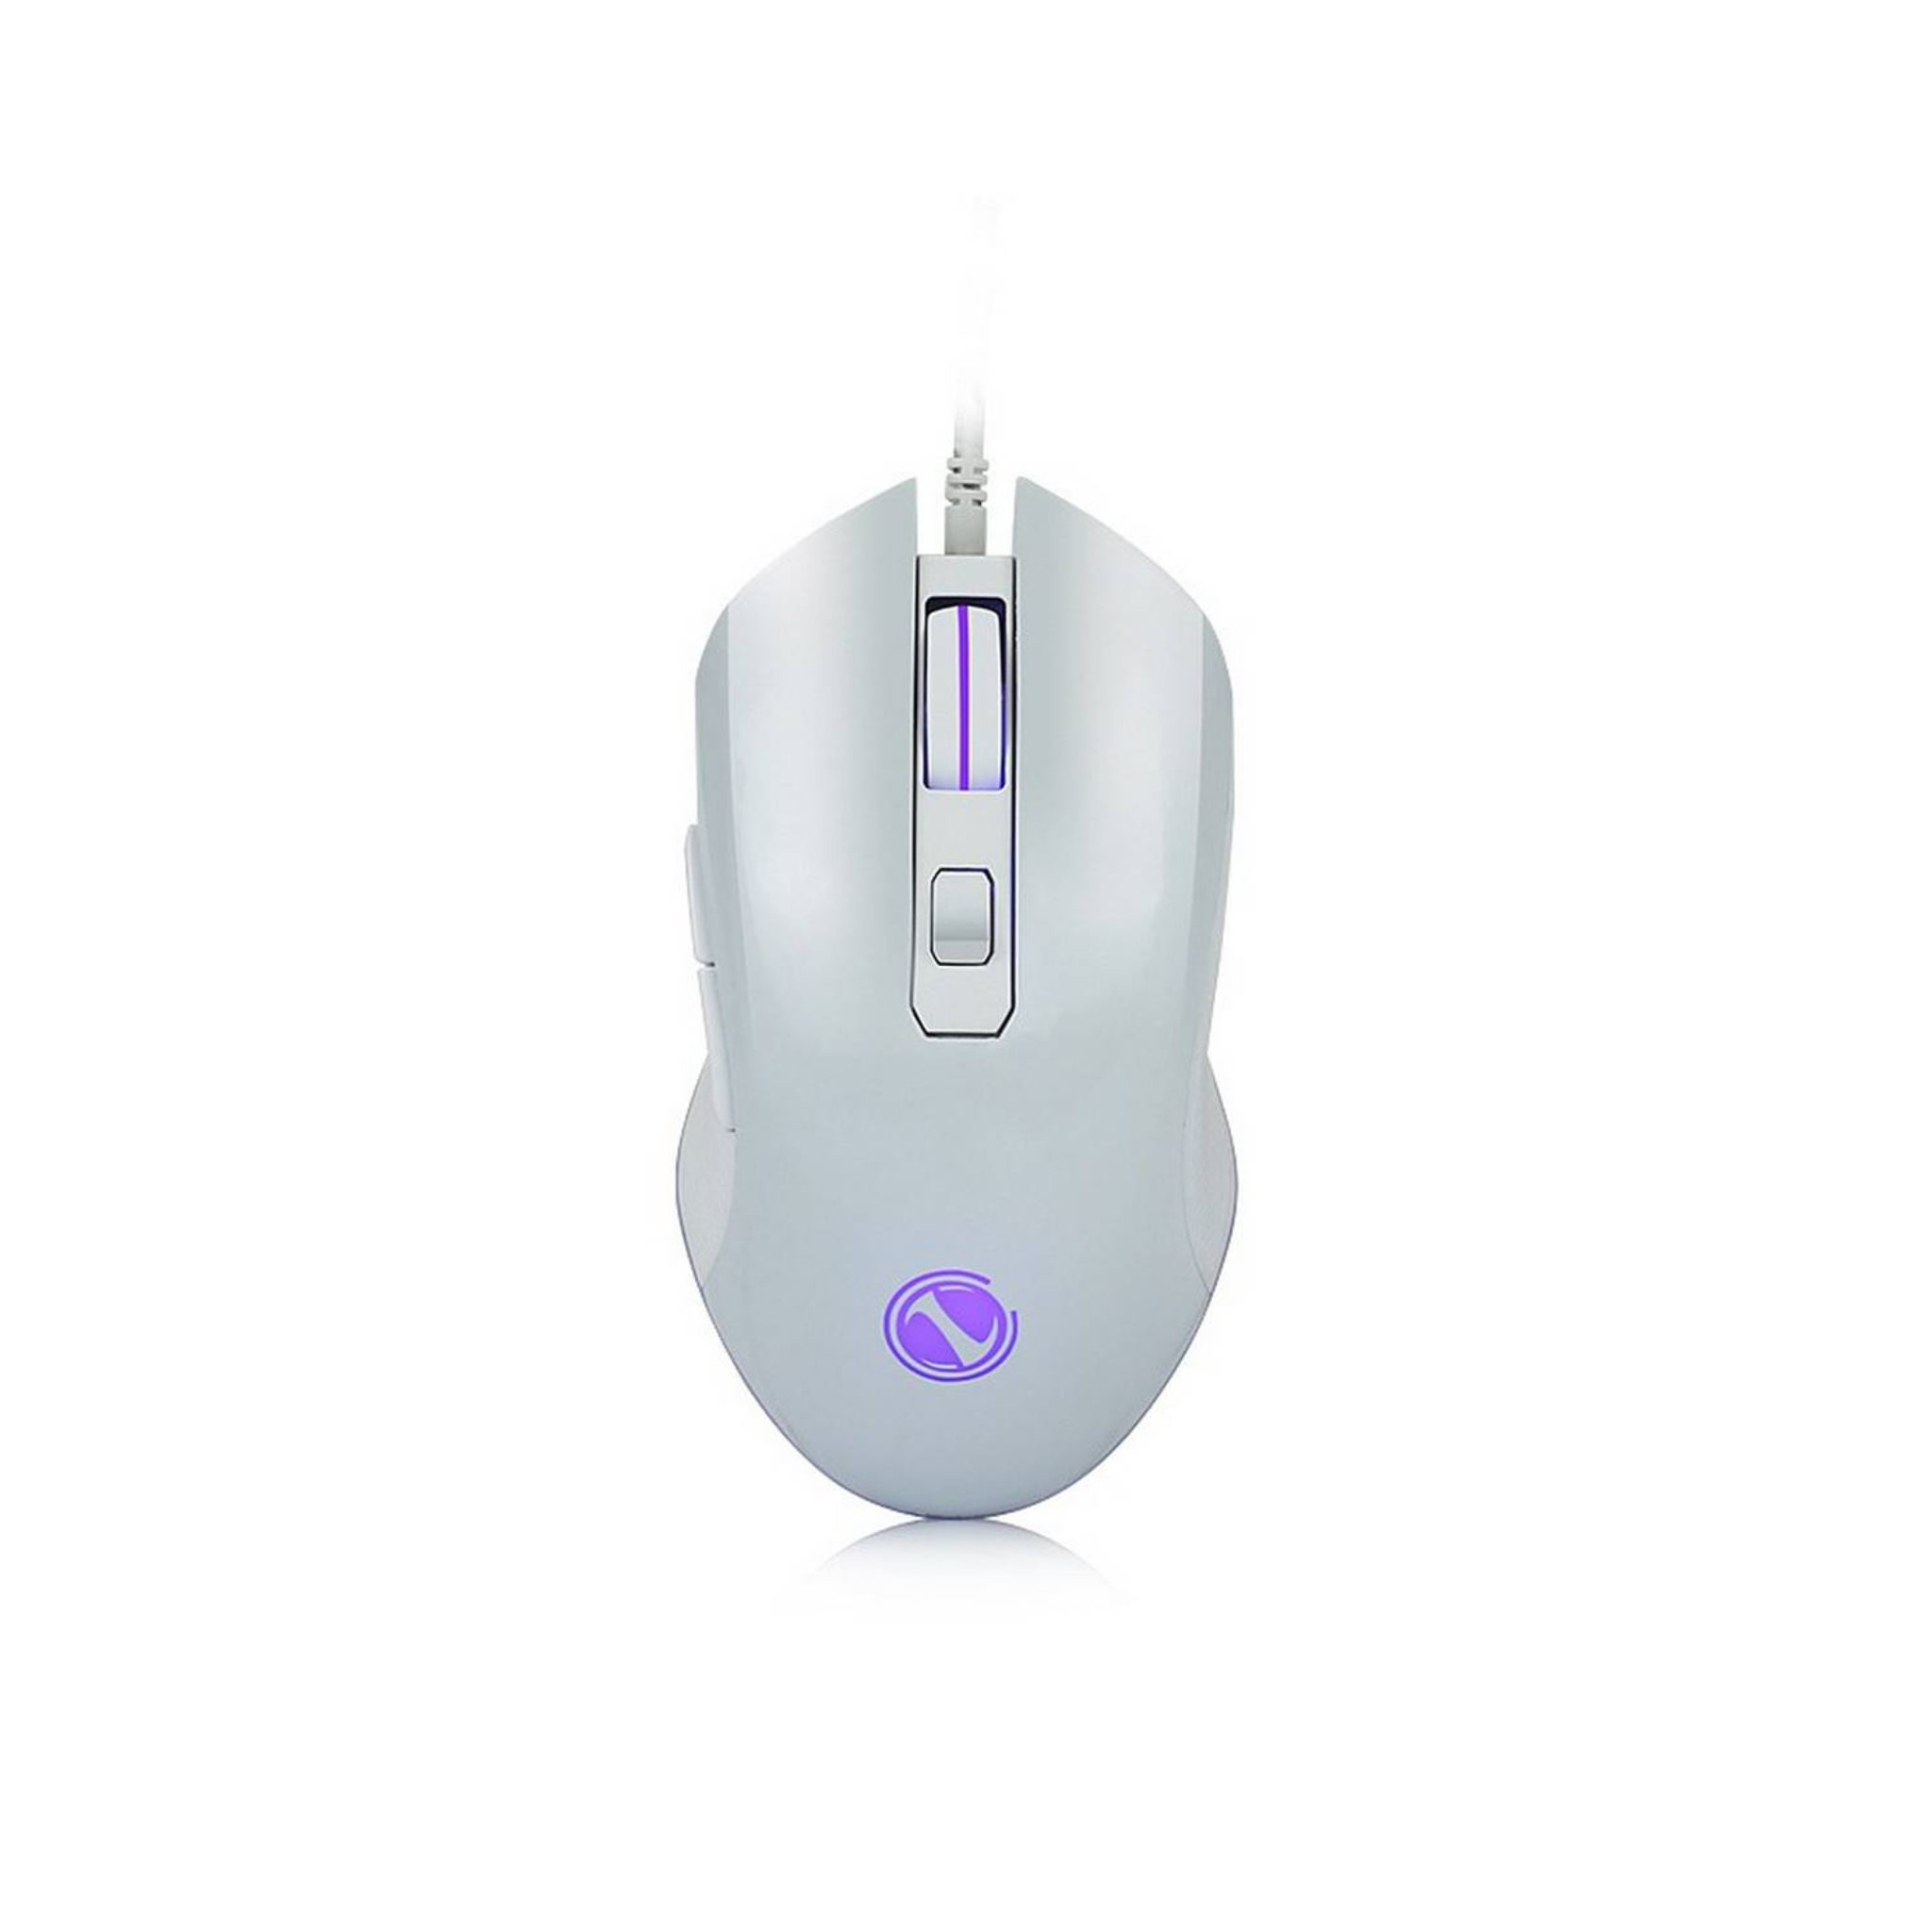 Mouse, 6 Buttons RGB Backlight, for Desktop Computer/Laptops